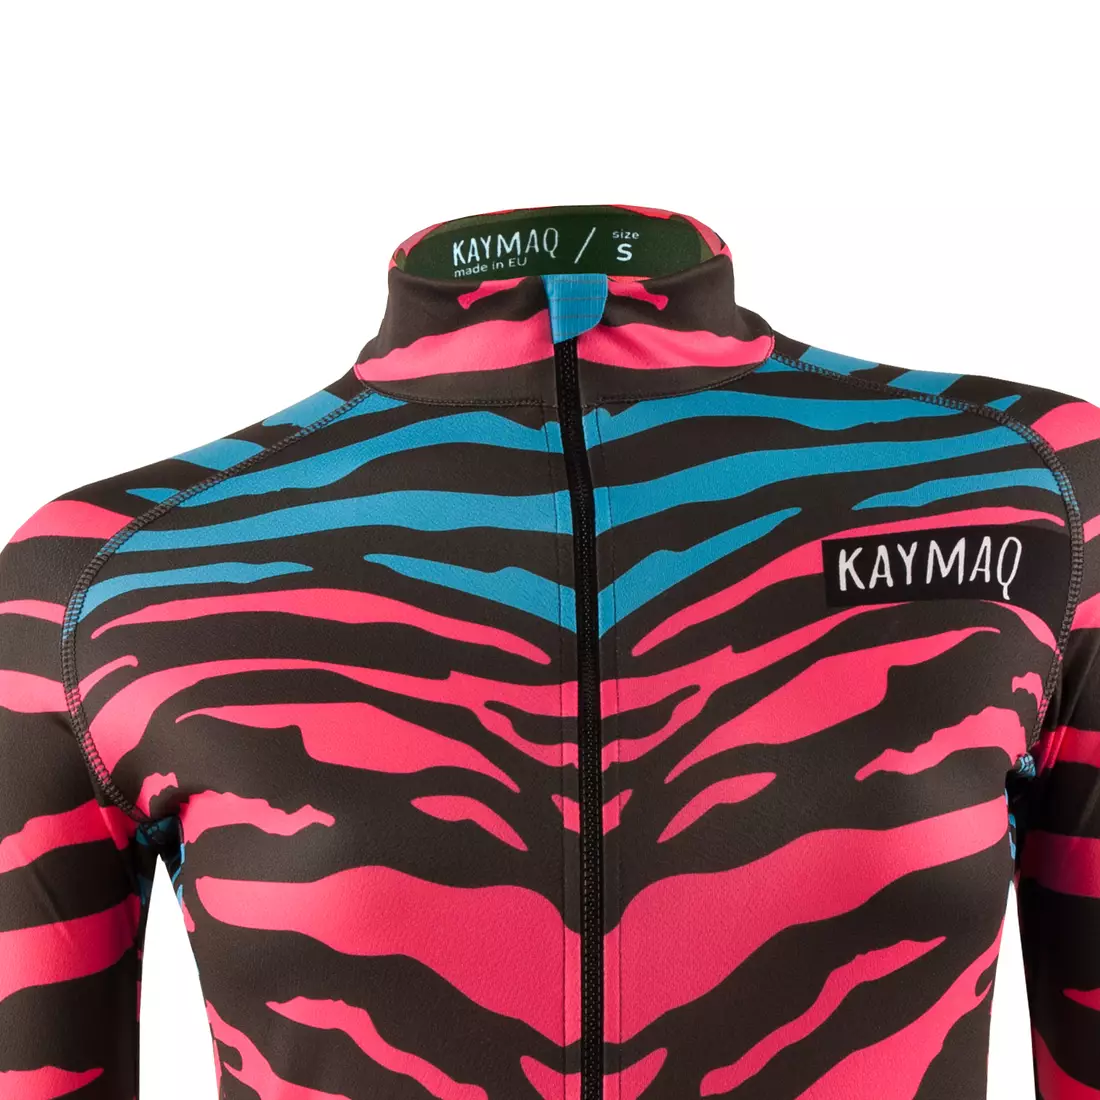 [Set] KAYMAQ DESIGN W1-W40 dámský cyklistický dres s krátkým rukávem + KAYMAQ DESIGN W1-W40 dámský cyklistický dres